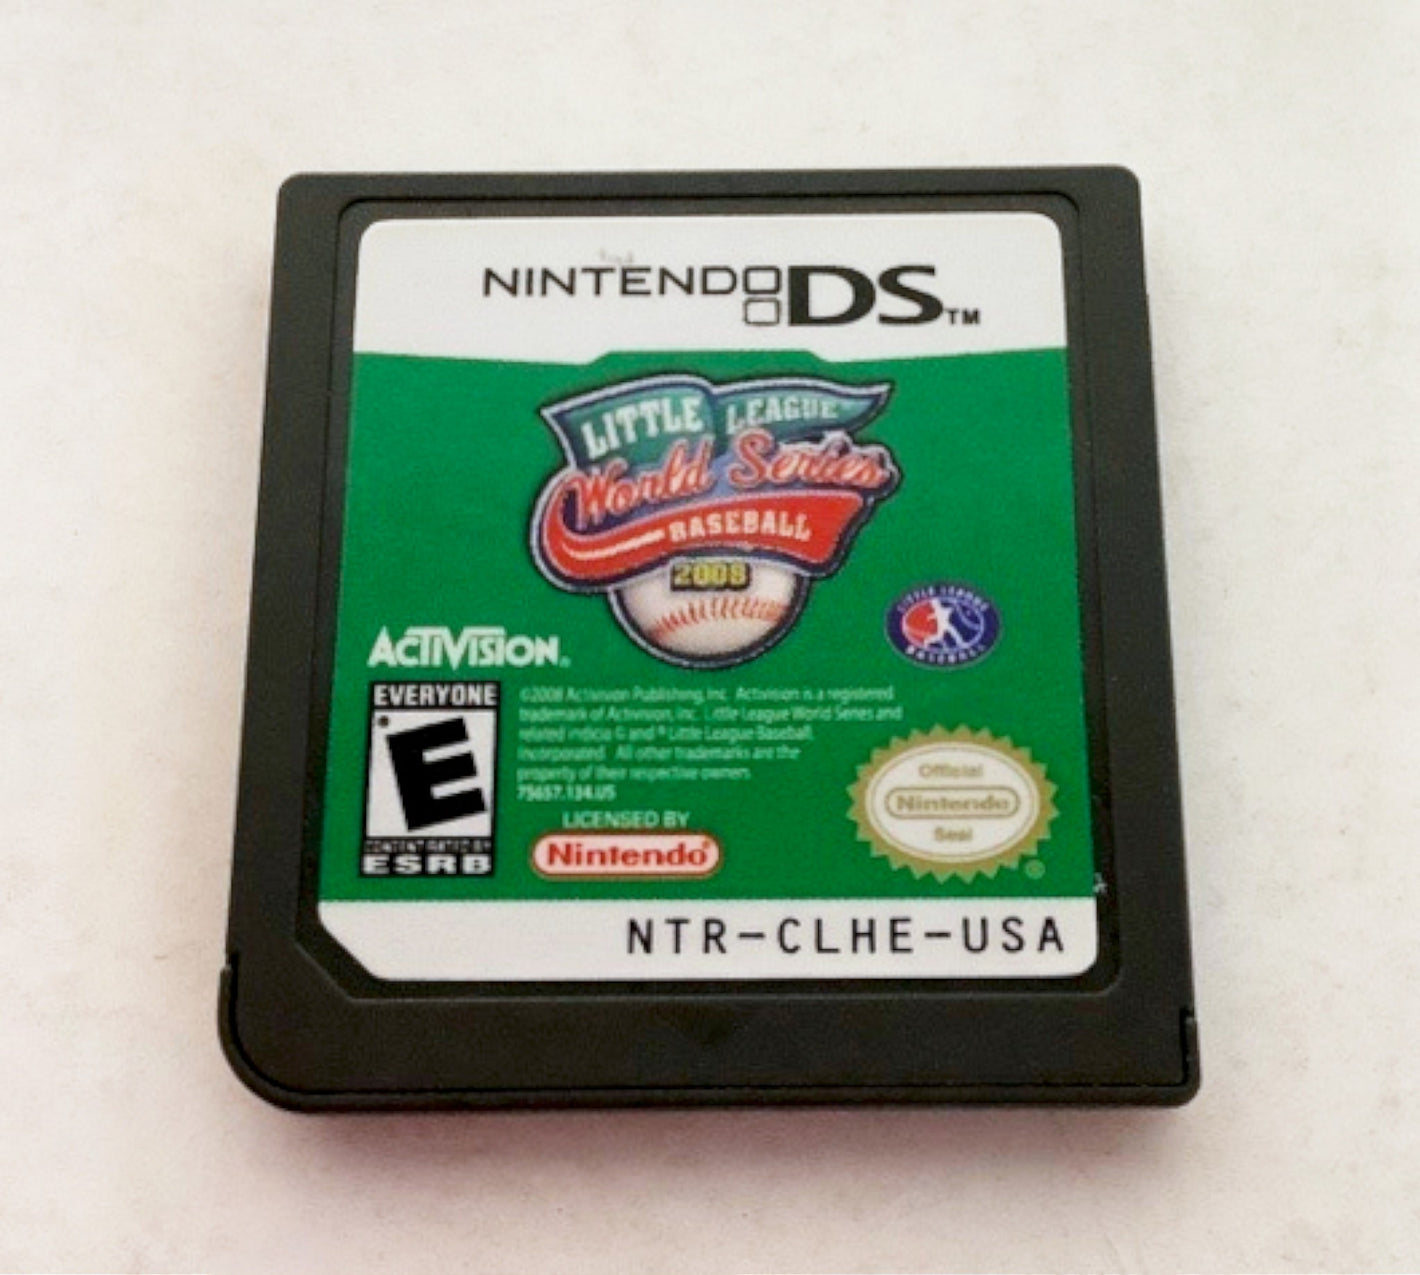 Little League World Series Baseball 2008 Nintendo DS 2008 Video Game CARTRIDGE [Used/Refurbished]